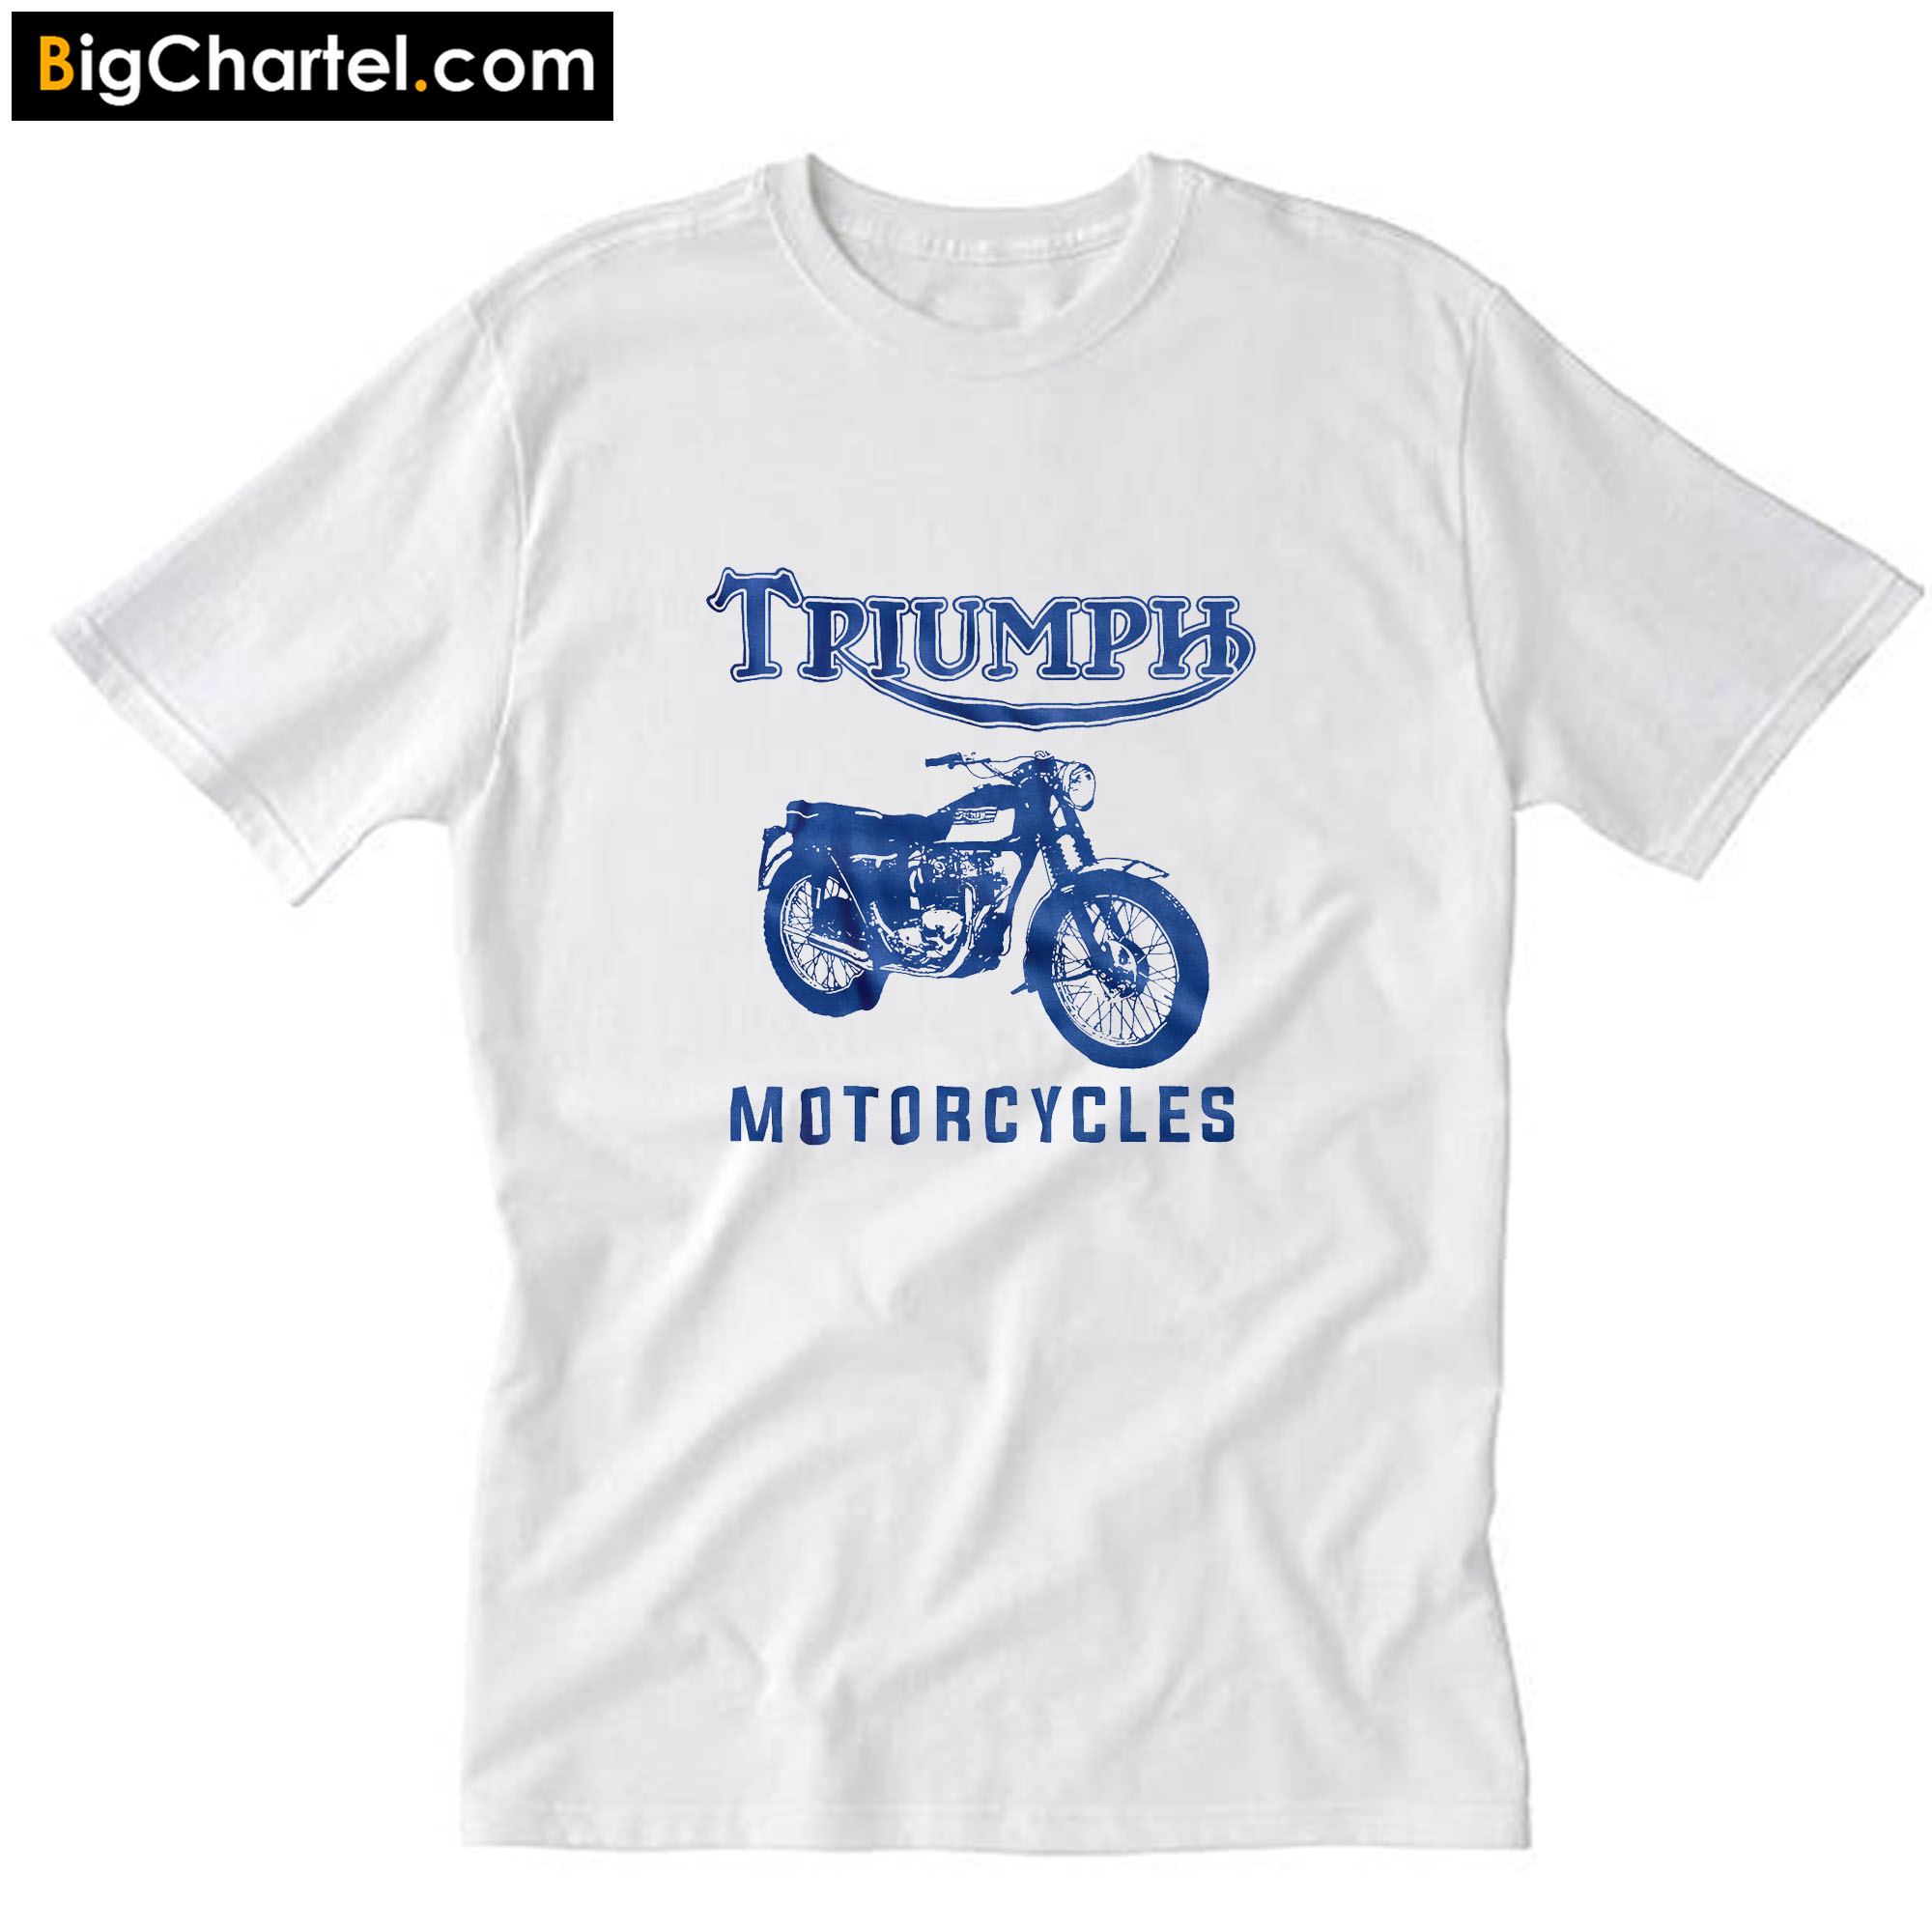 GENUINE TRIUMPH MOTORCYCLE T-SHIRT SS19 HUGHES TEE 